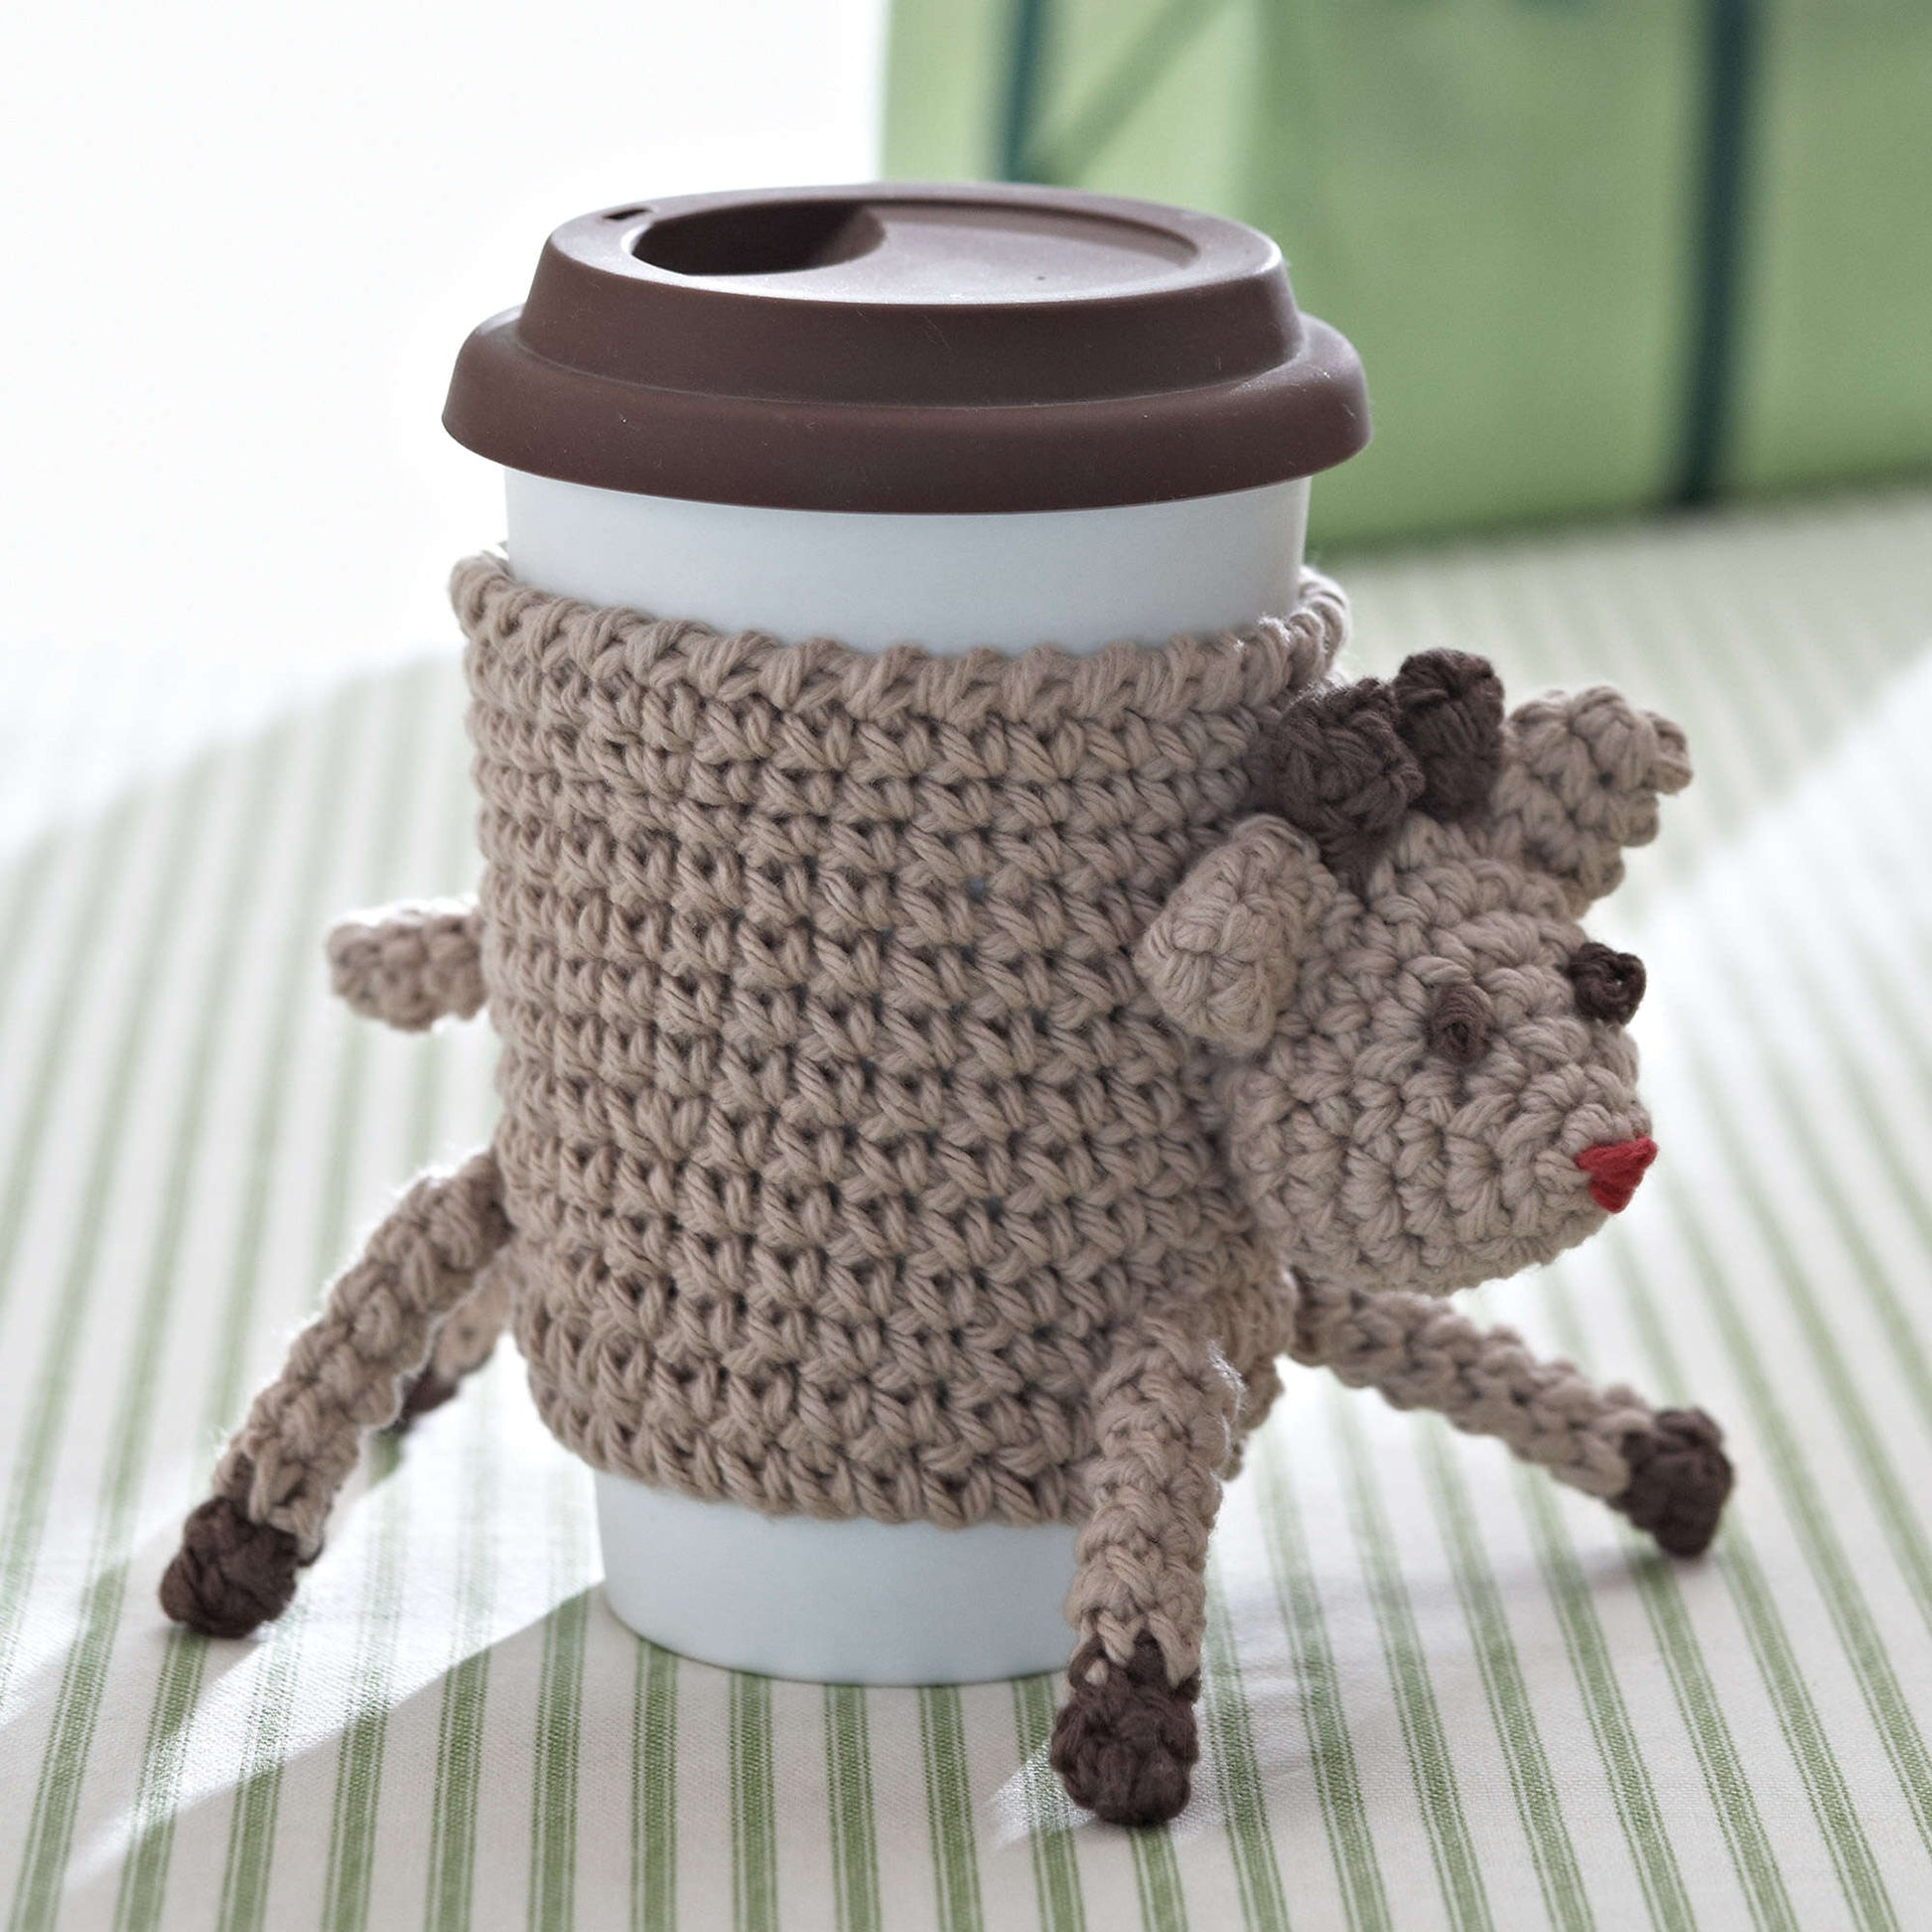 Bernat Reindeer Cup Cozy Crochet Holiday made in Bernat Handicrafter Cotton yarn